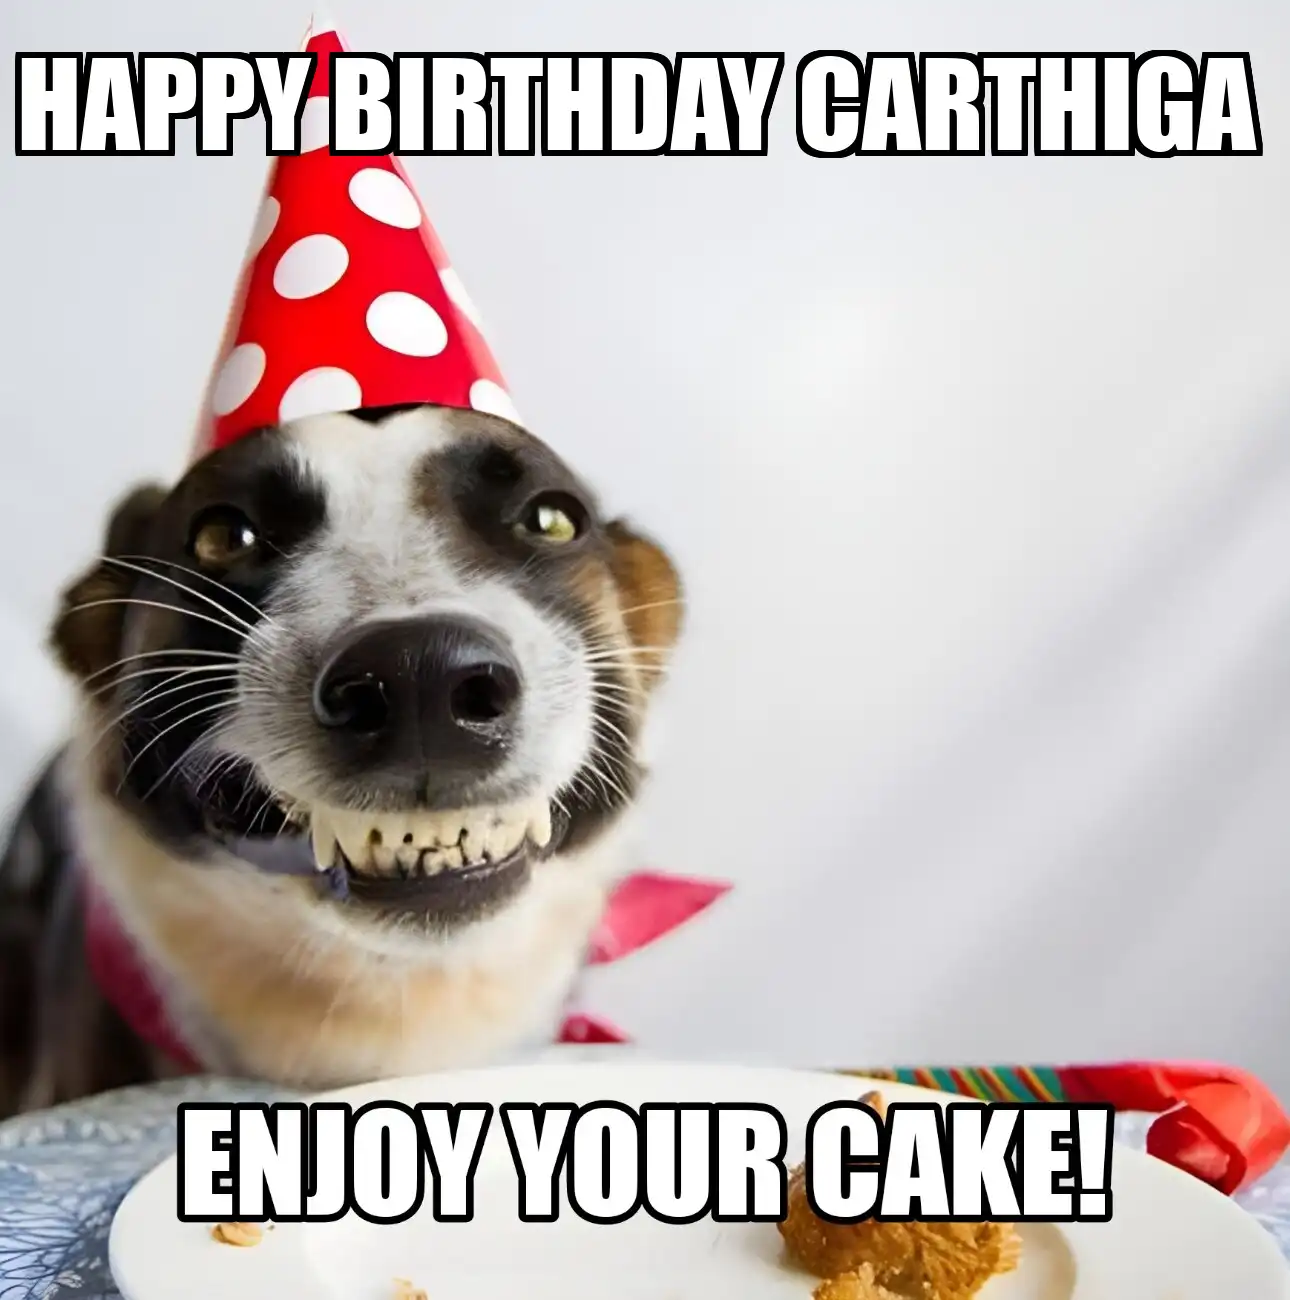 Happy Birthday Carthiga Enjoy Your Cake Dog Meme